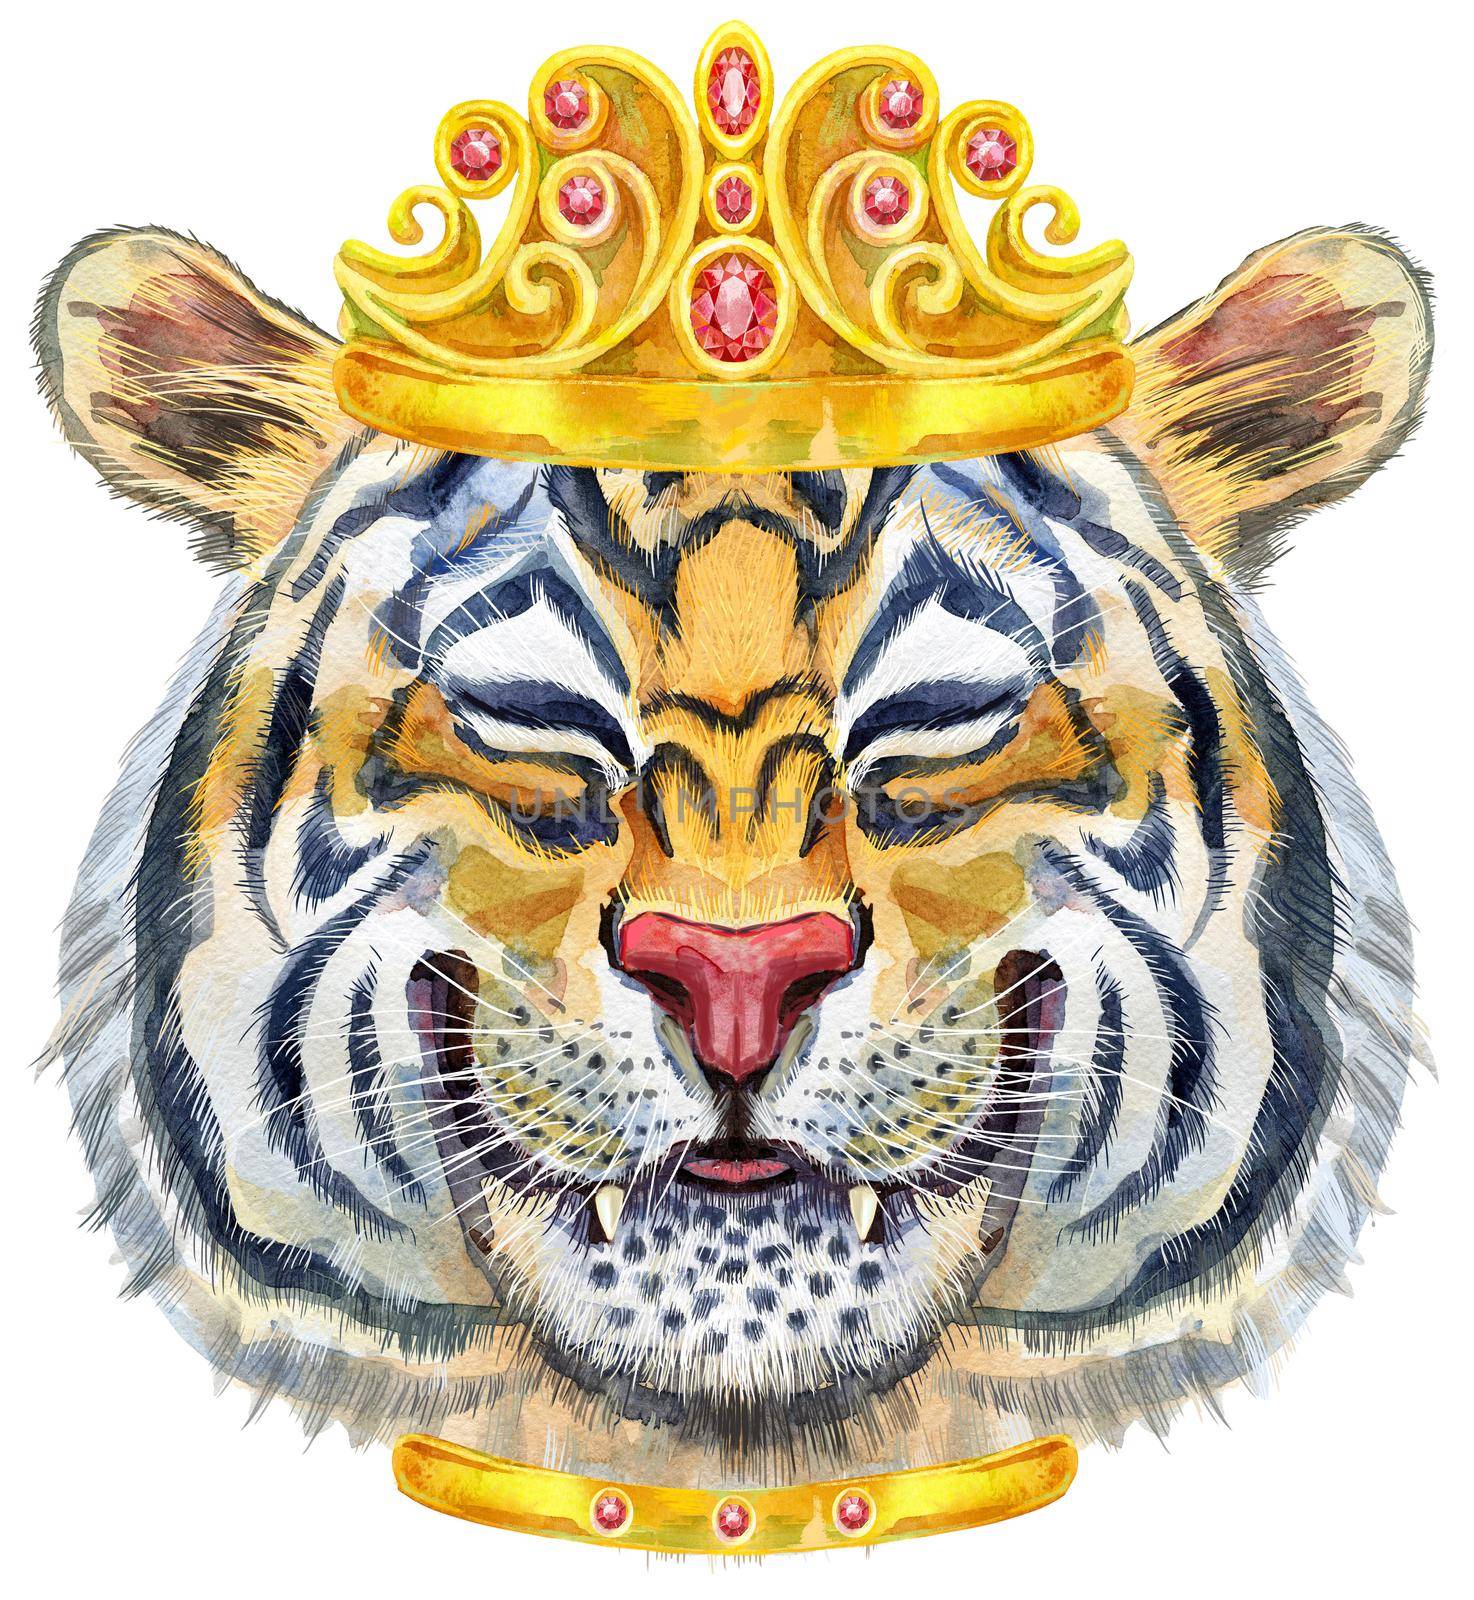 Watercolor illustration of orange smiling tiger with golden crown